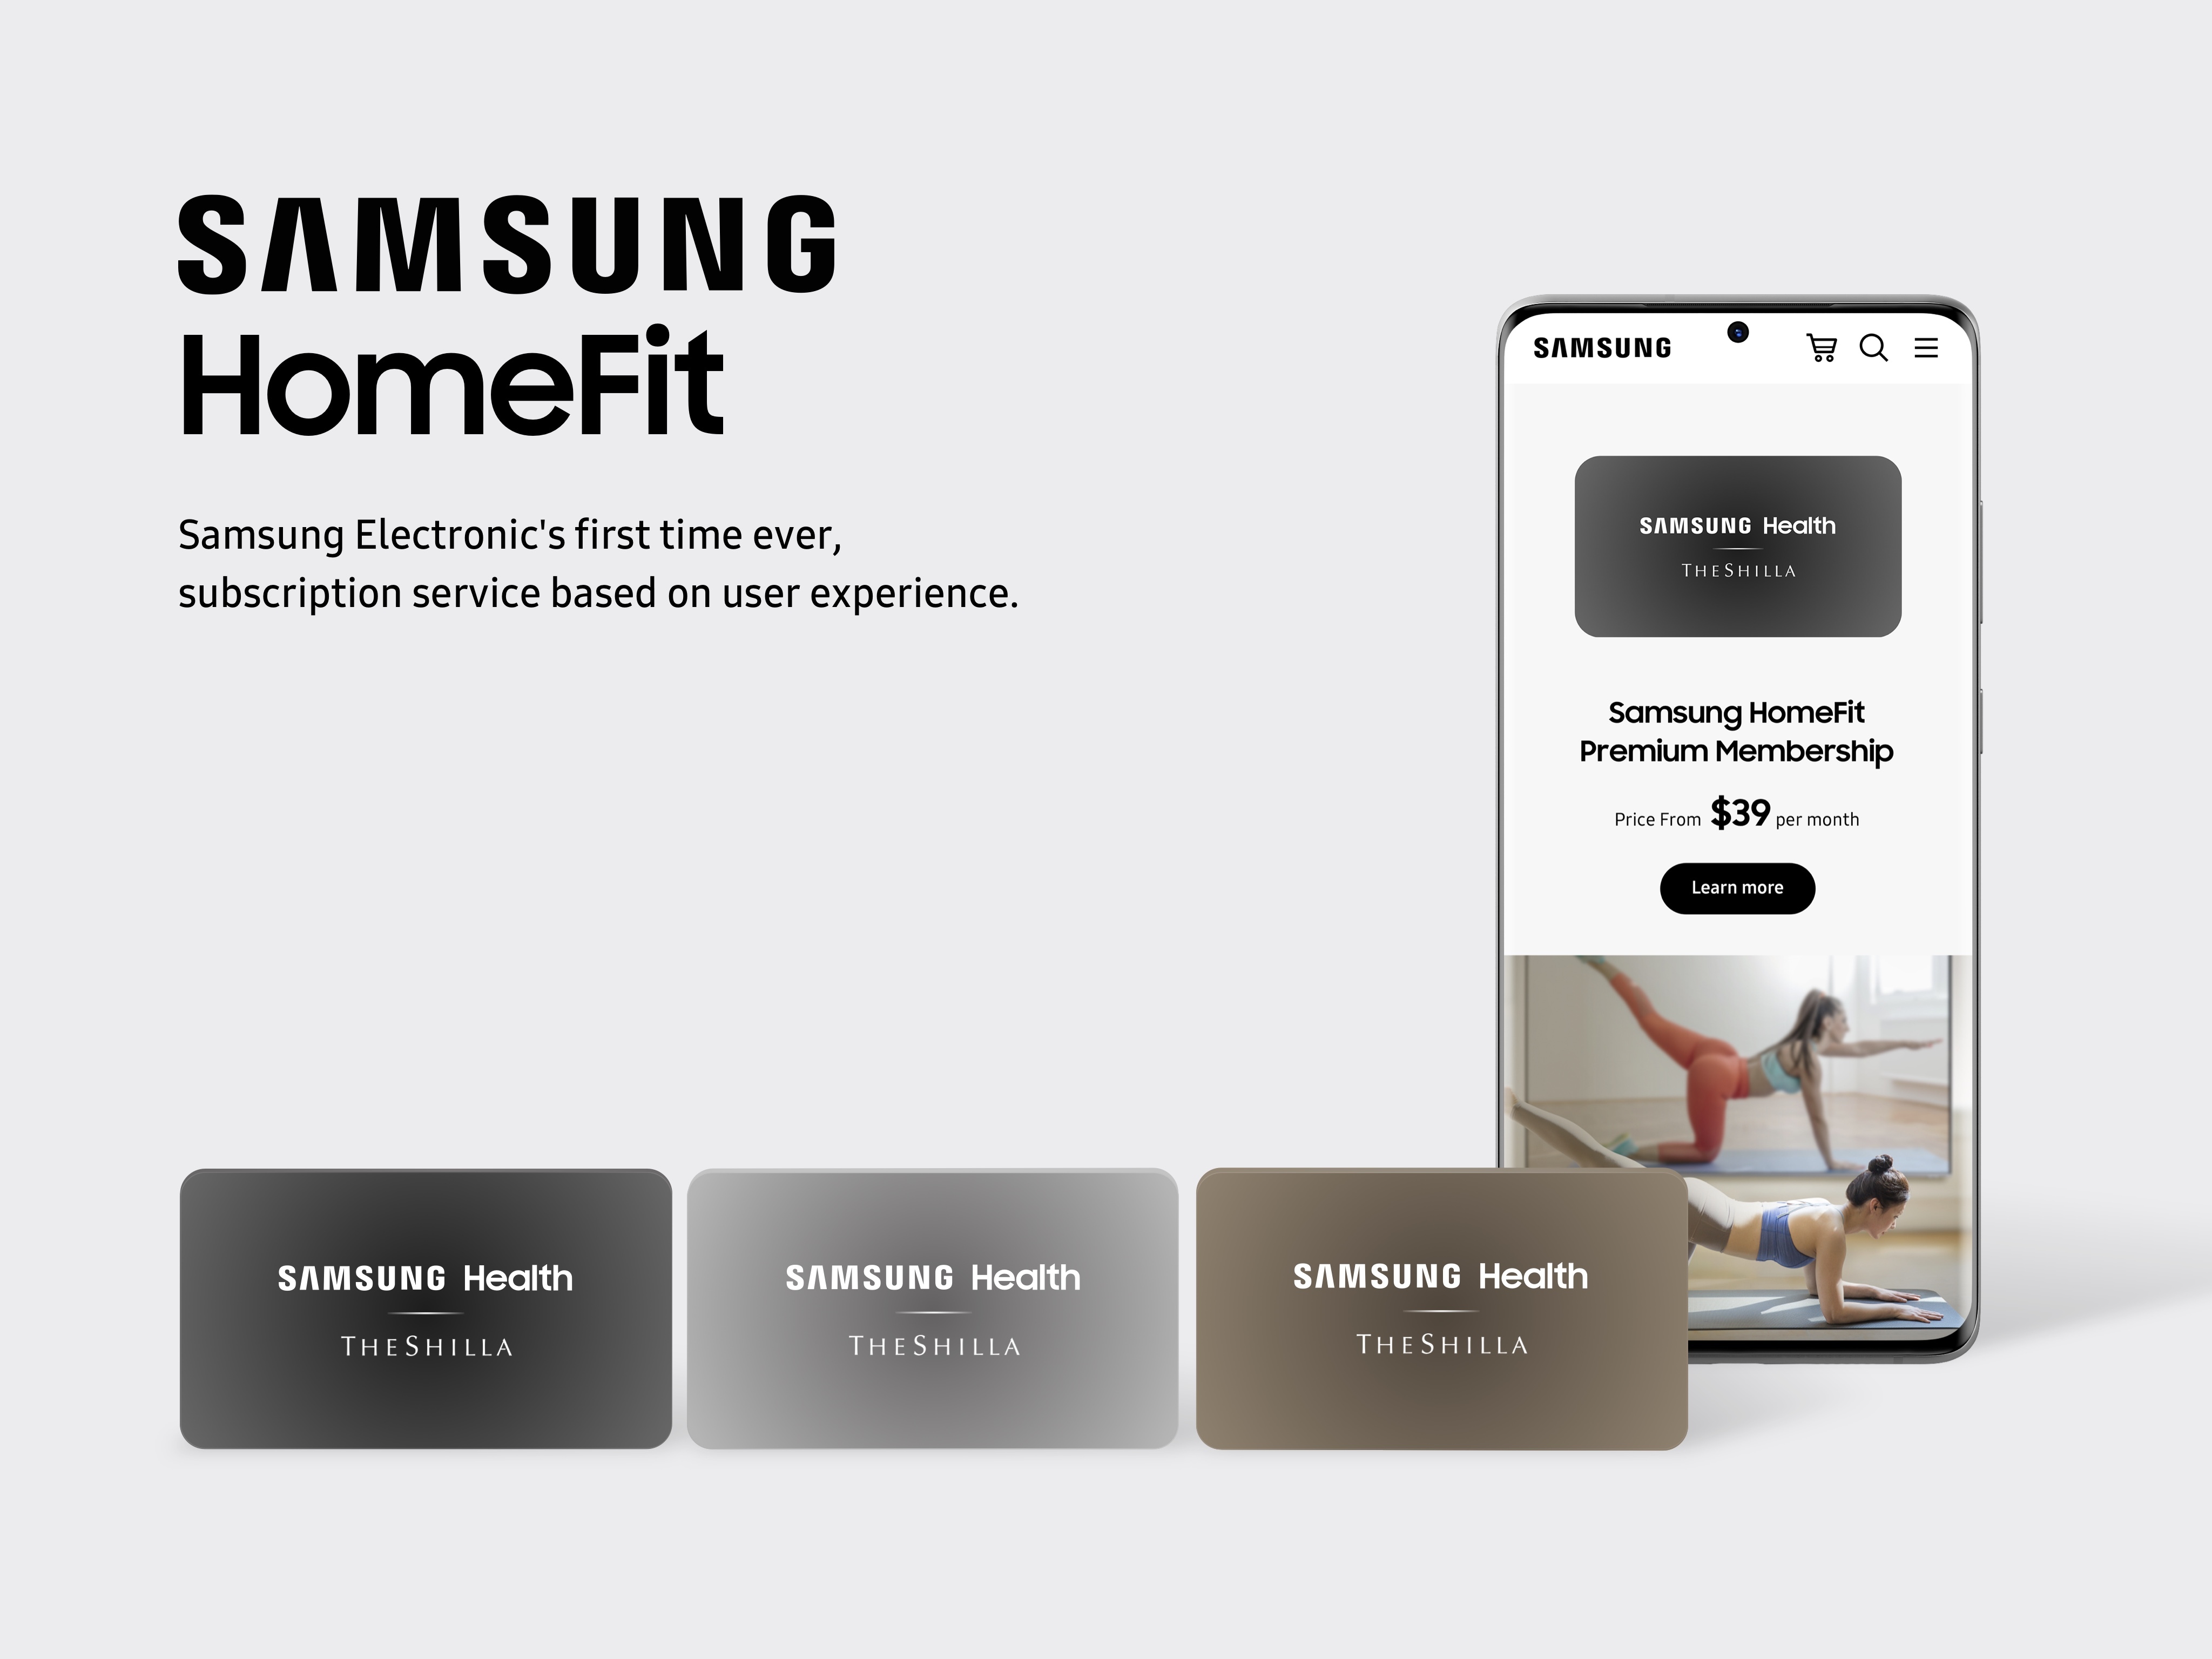 Samsung HomeFit